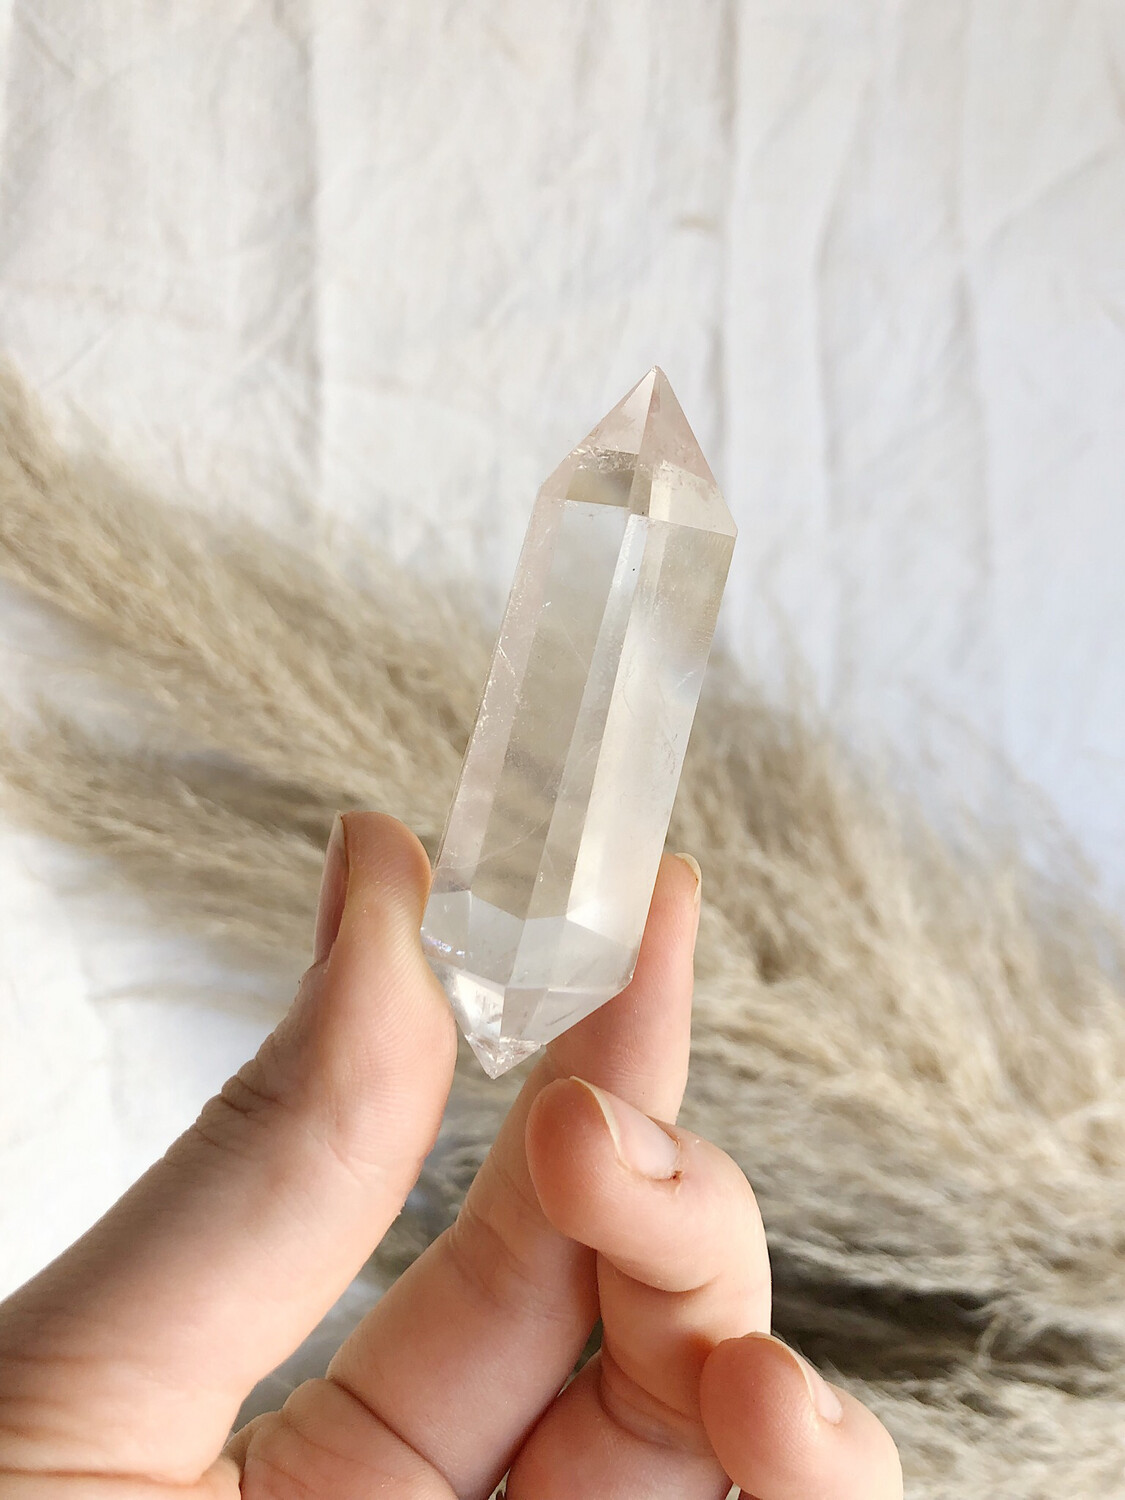 Losse kristallen: Bergkristal dubbeleinder